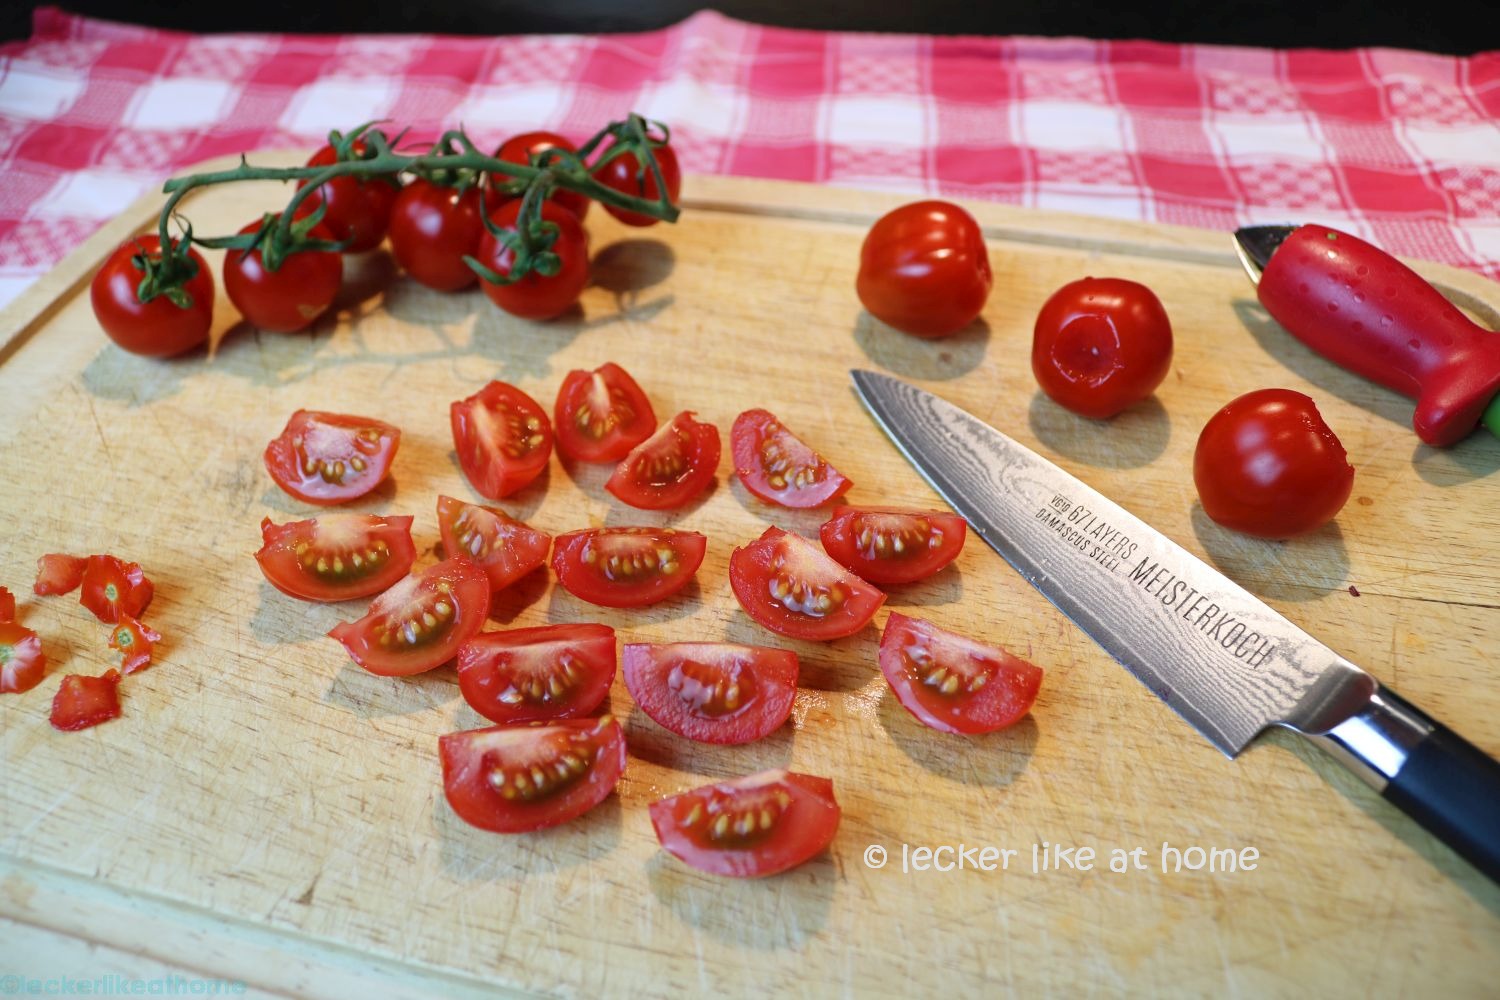 Thunfisch-Bohnen-Salat - Tomaten vierteln